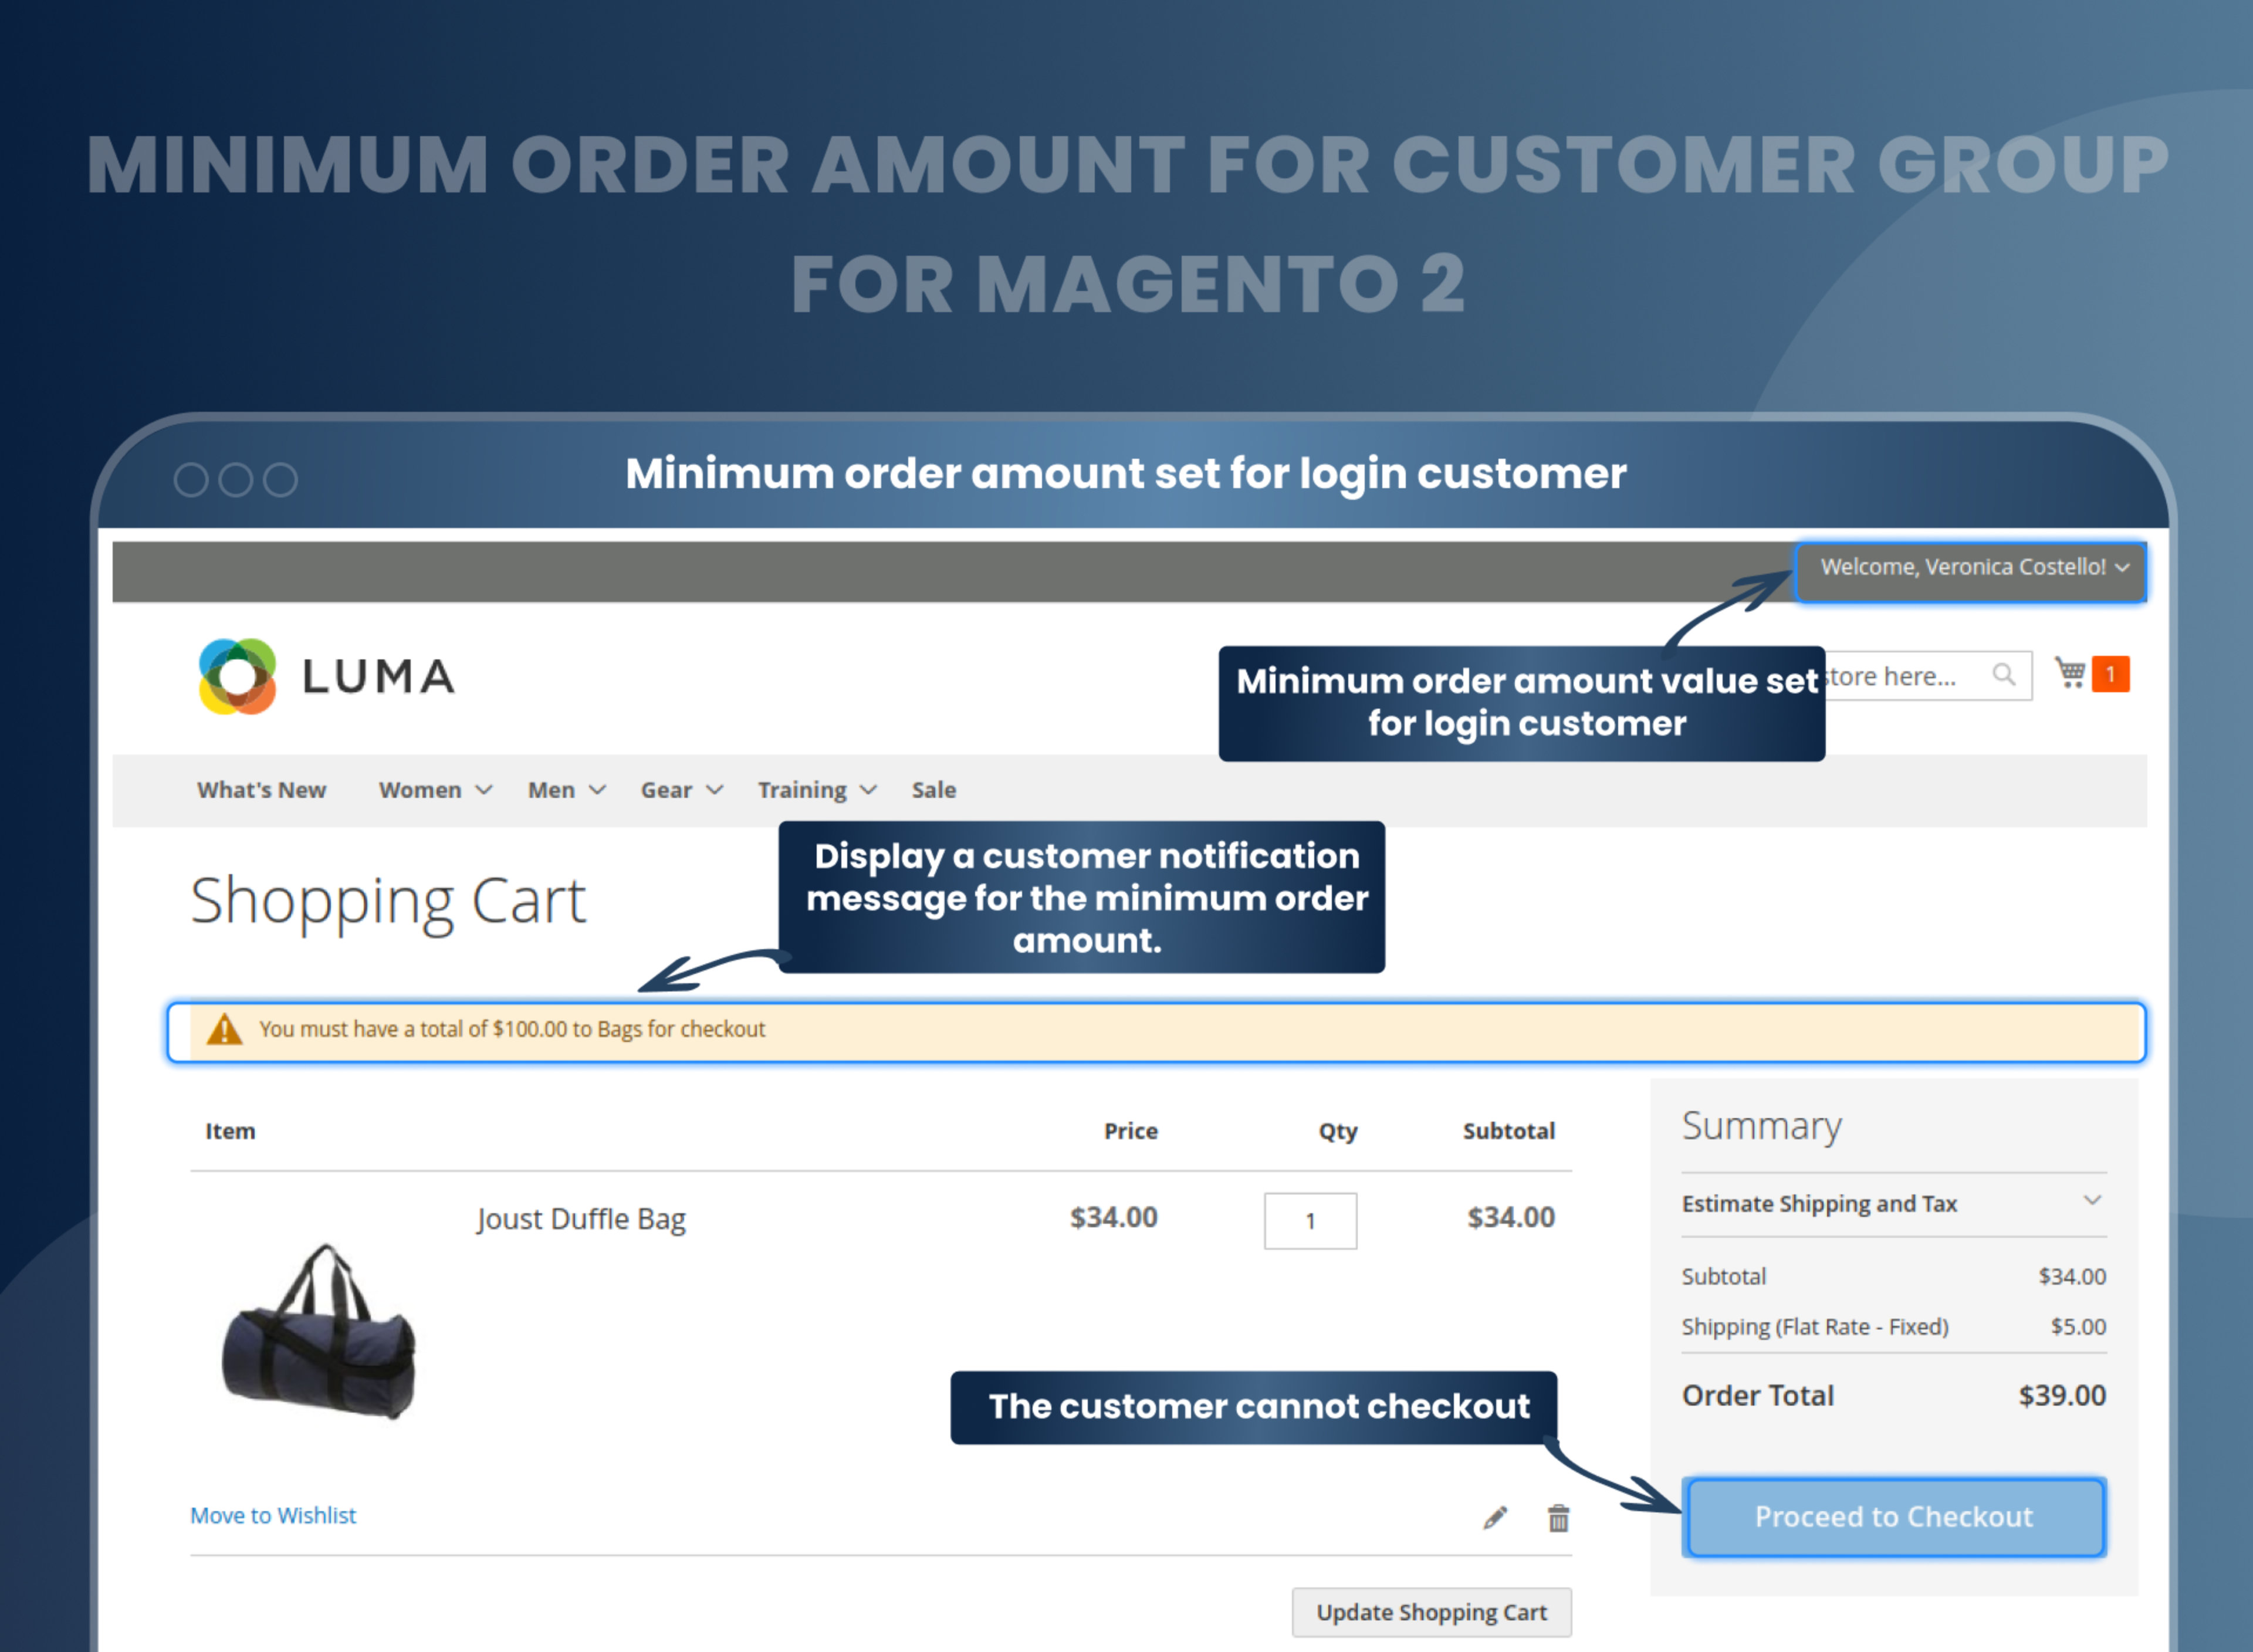 Minimum order amount set for login customer